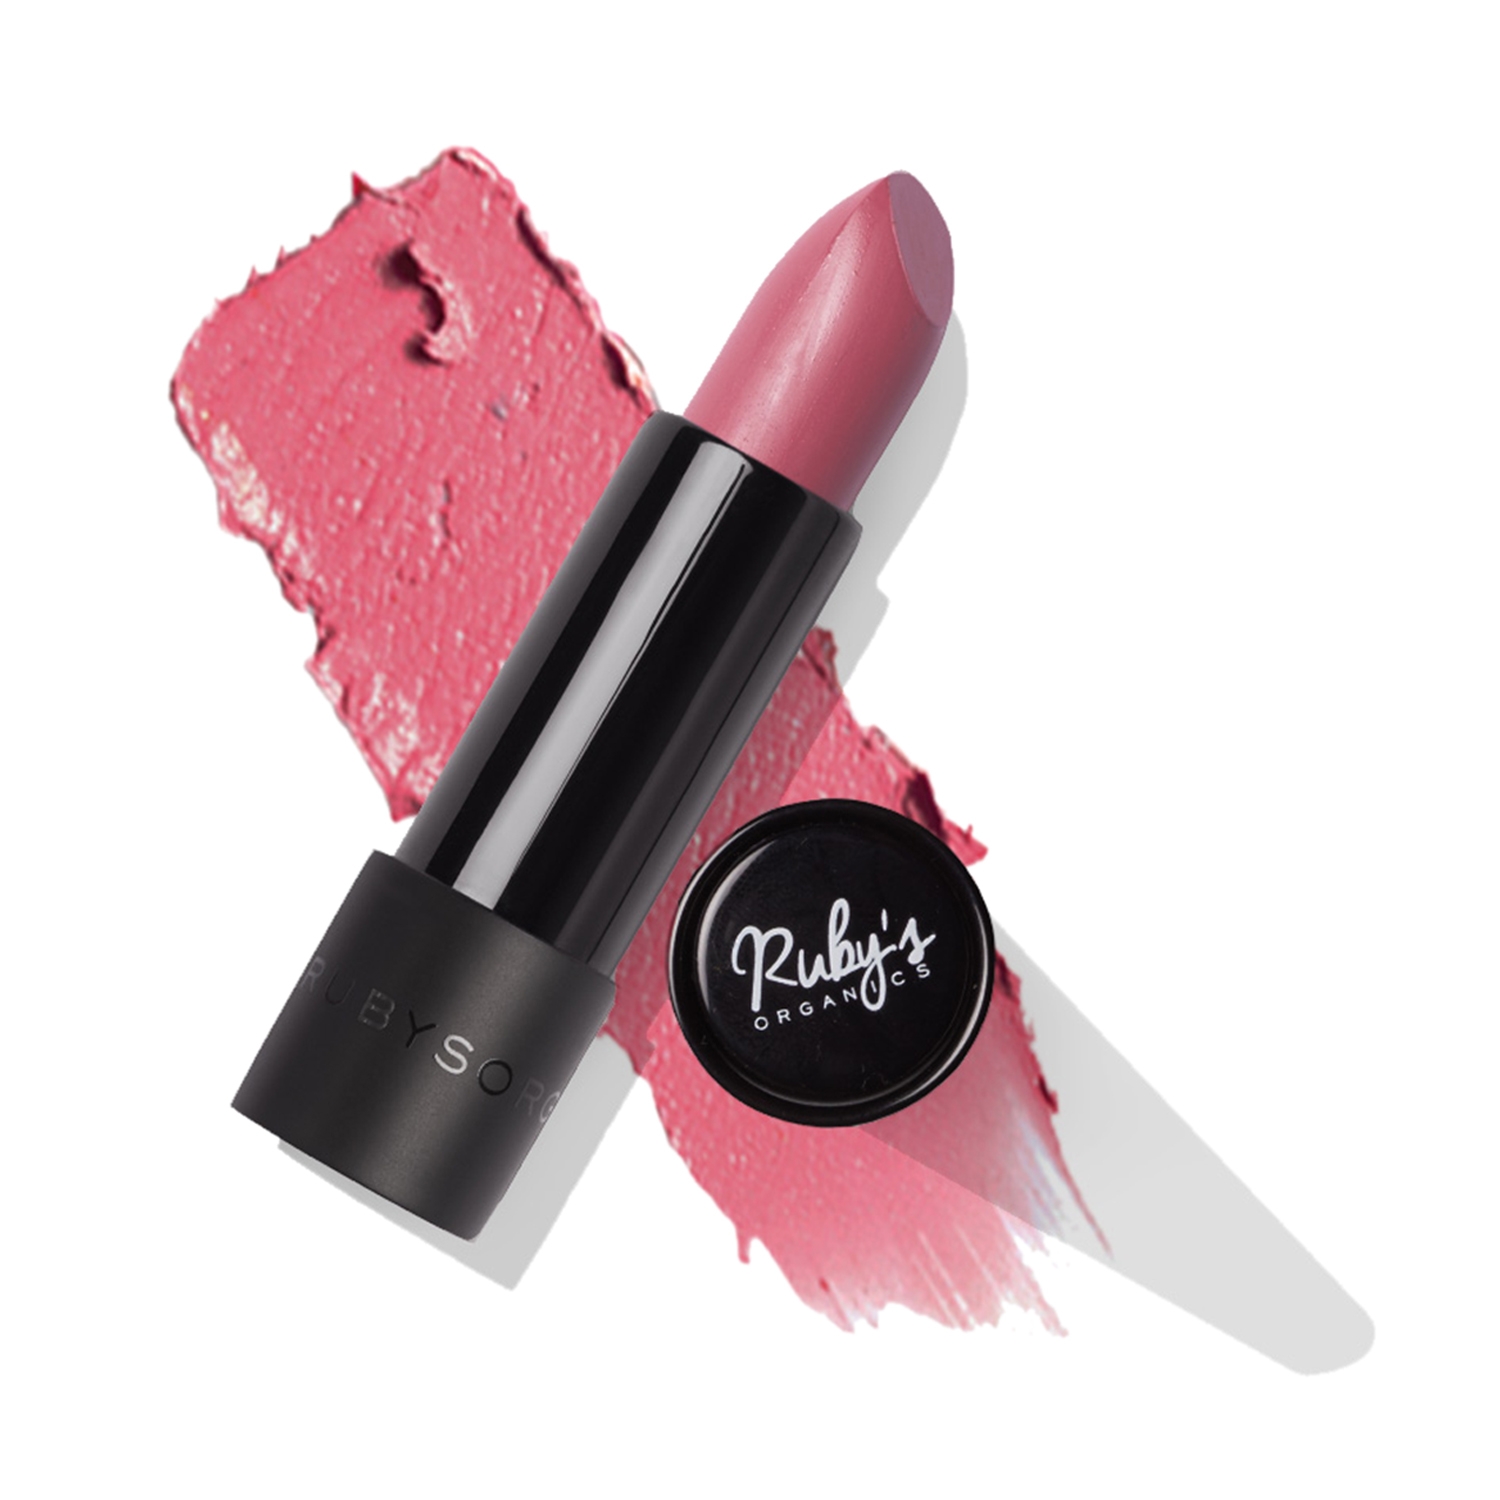 Ruby's Organics | Ruby's Organics Lipstick - Nuddy (3.7g)